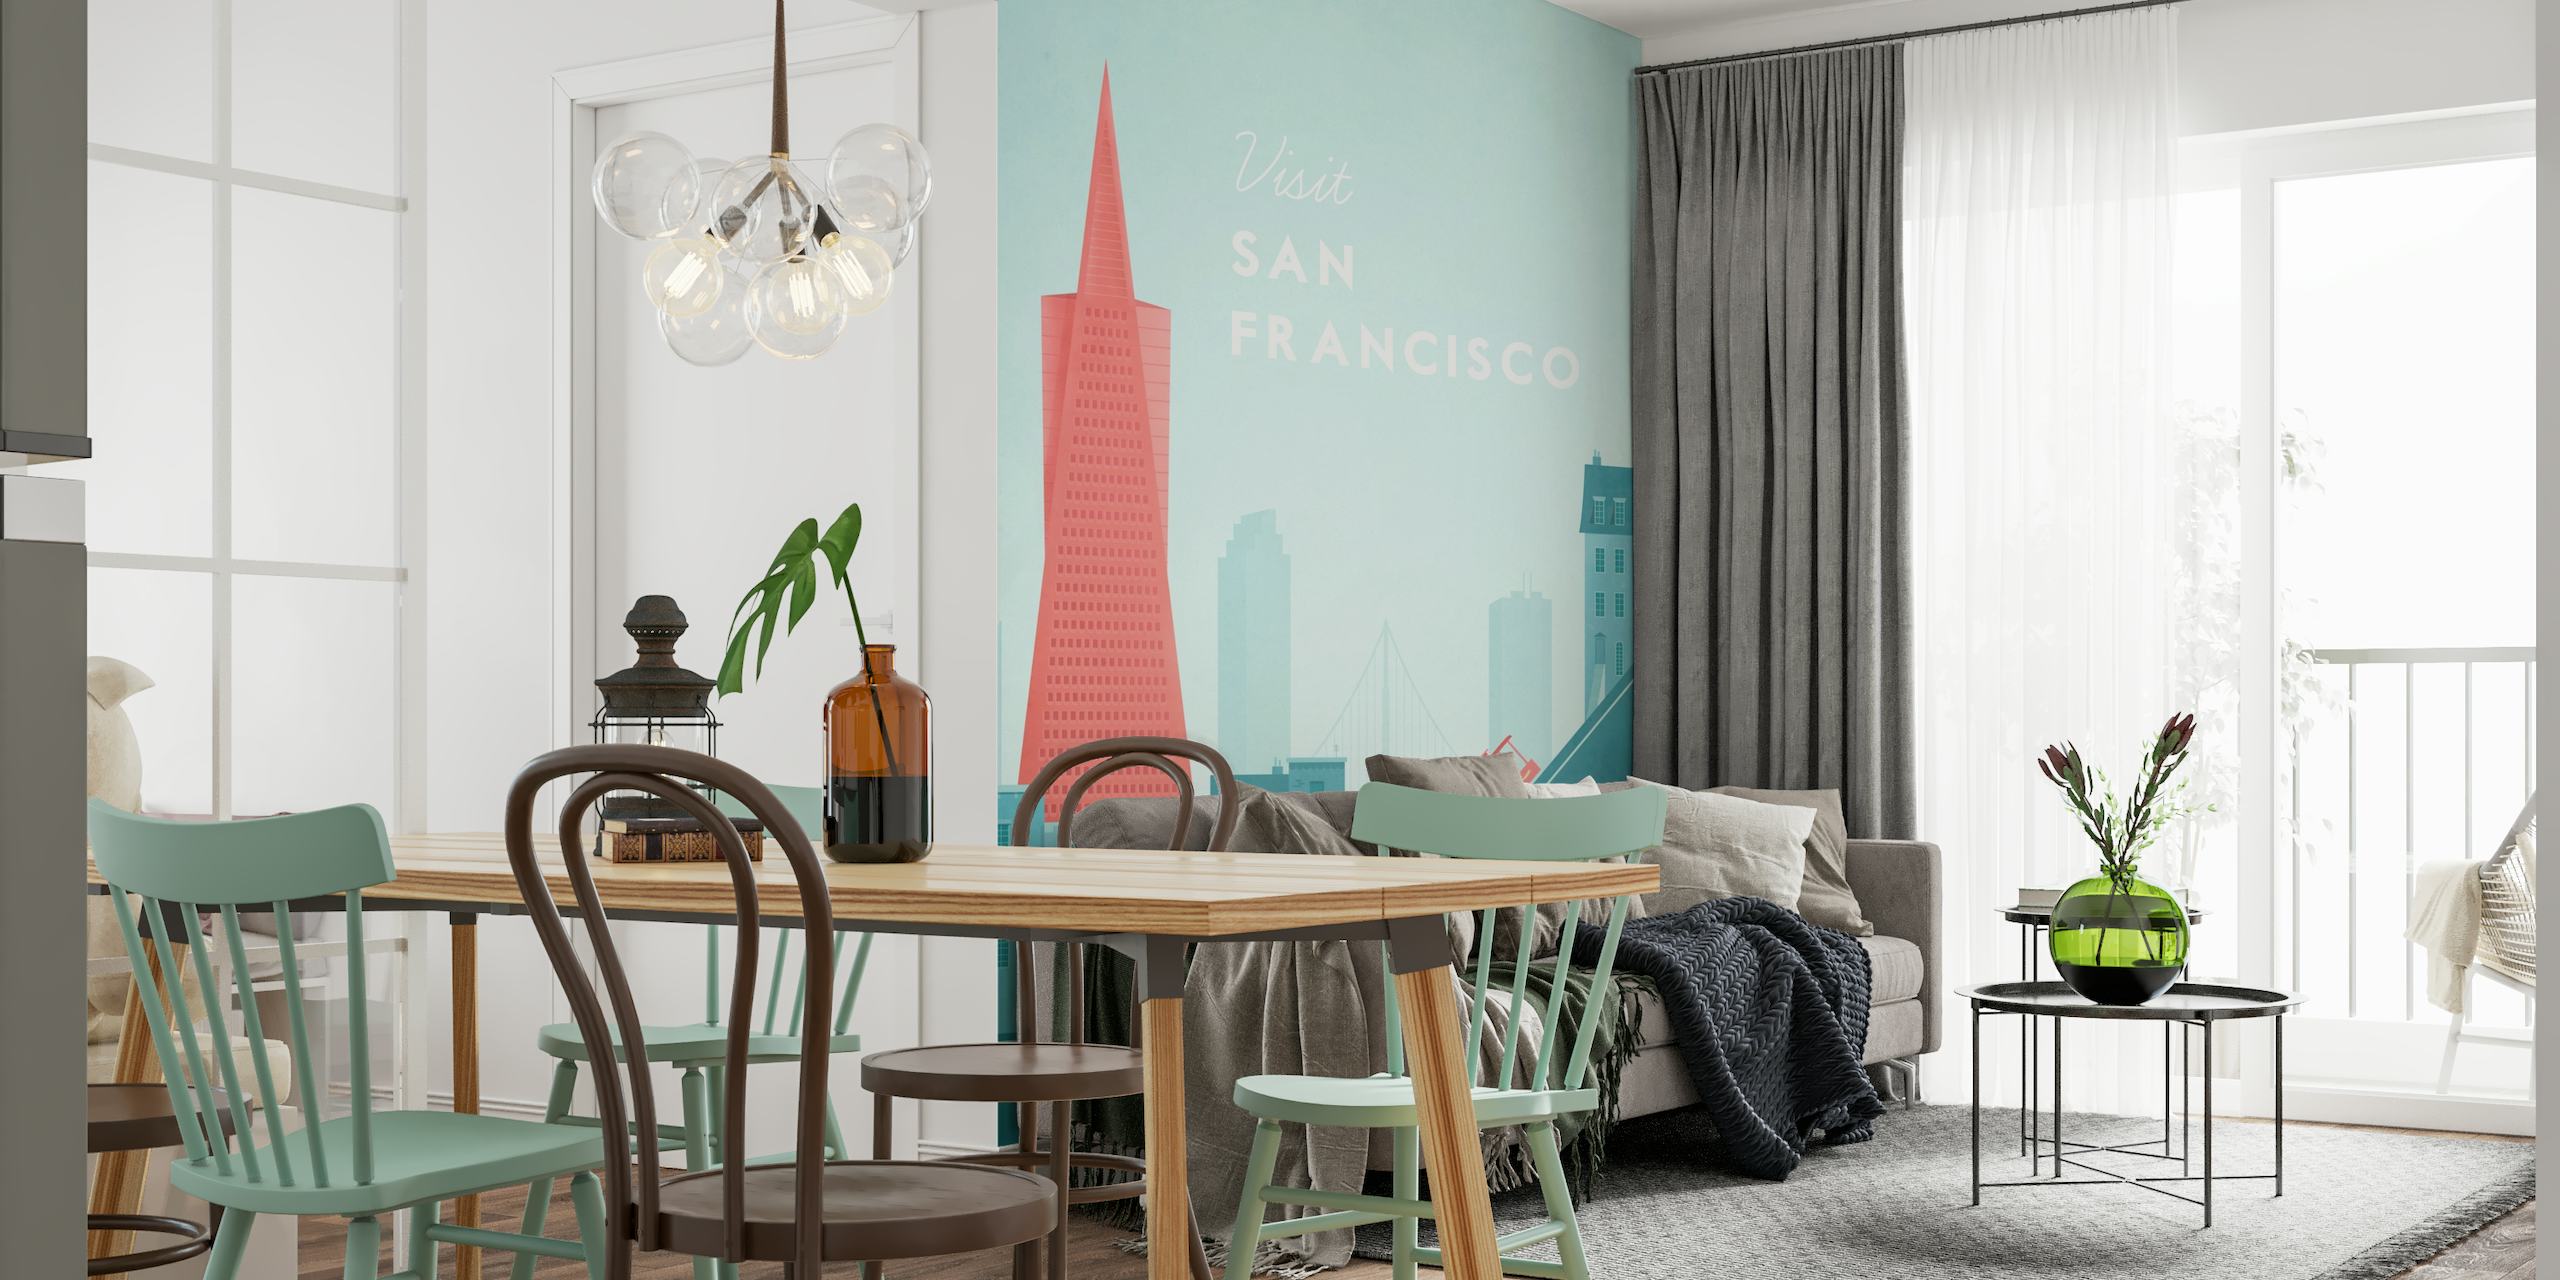 San Francisco Travel Poster behang